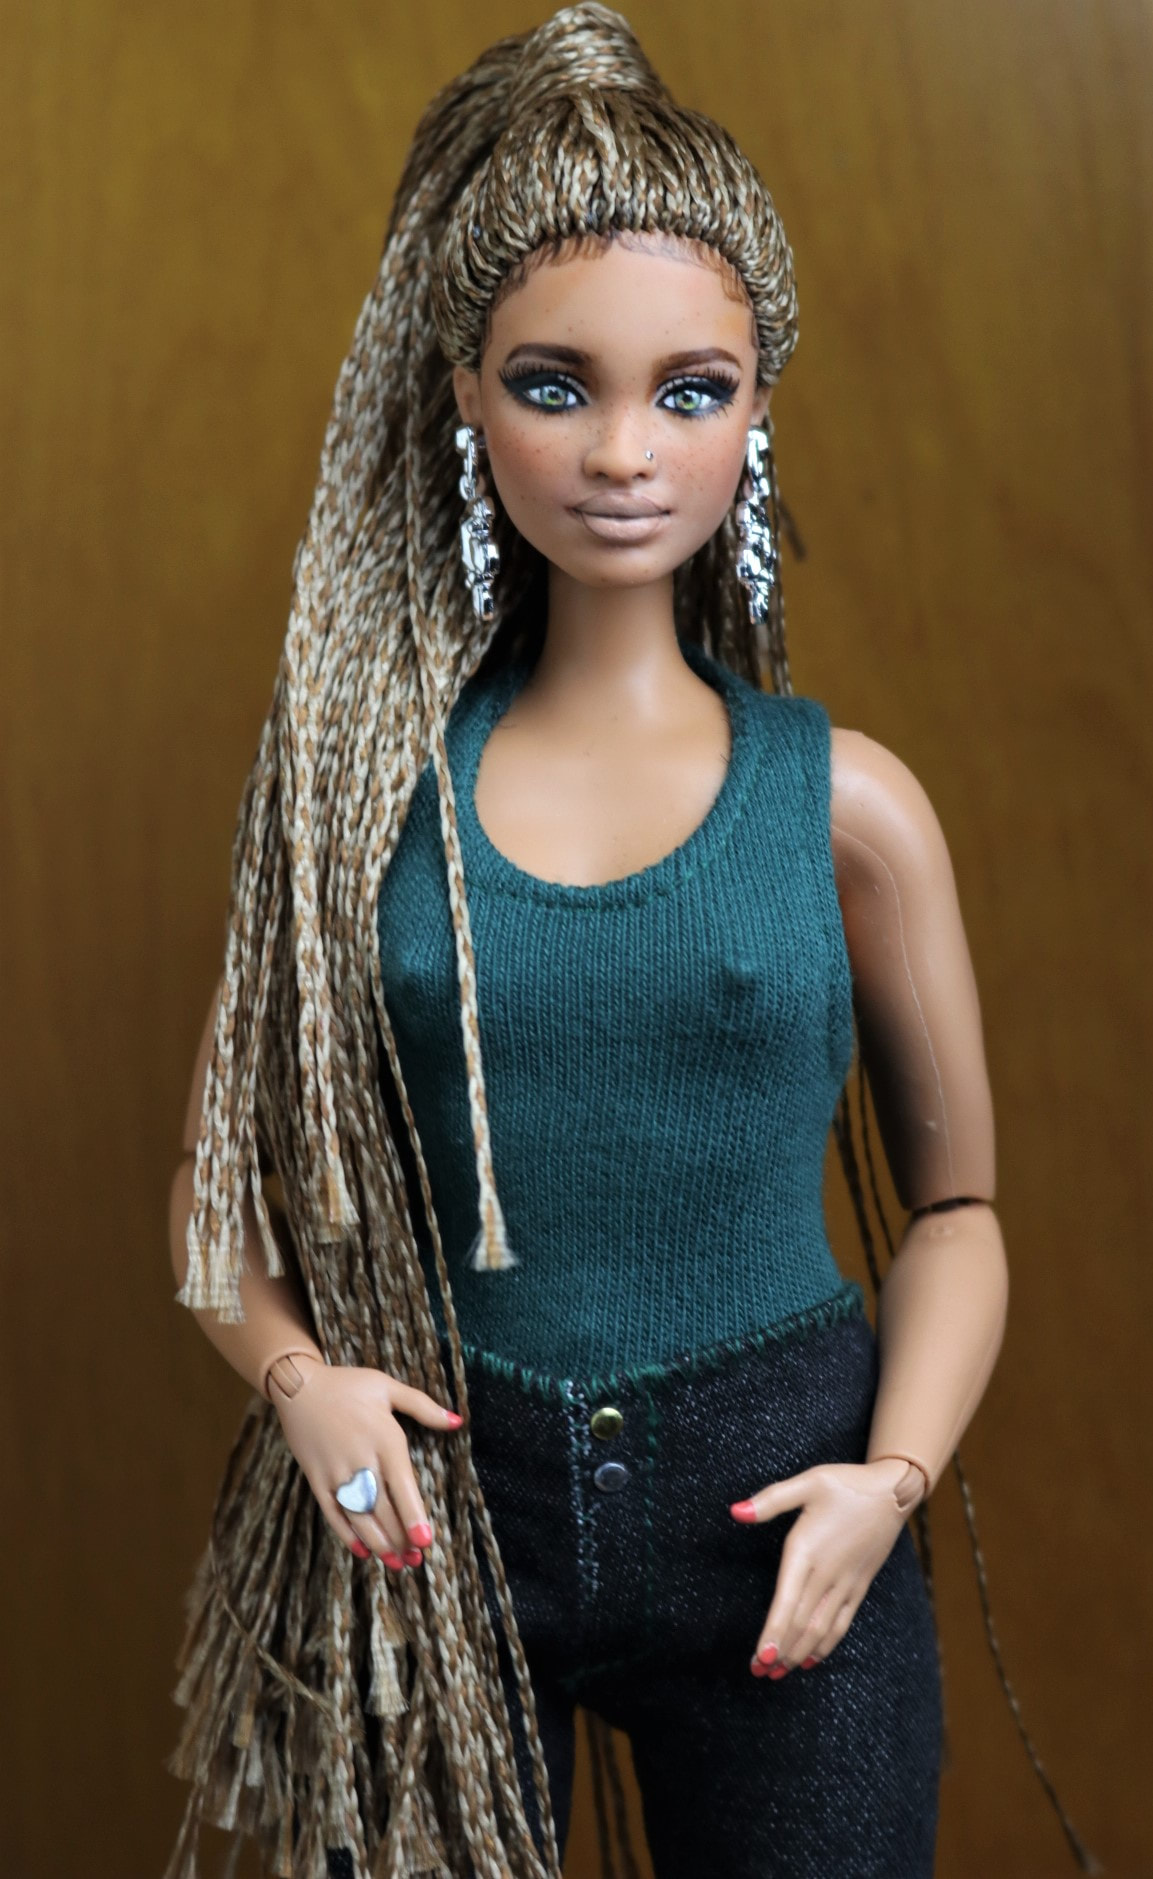 Kashi Hybridarticulated Customized Biracial Ooak Bmr1959 Braids Barbie Head On A Curvy